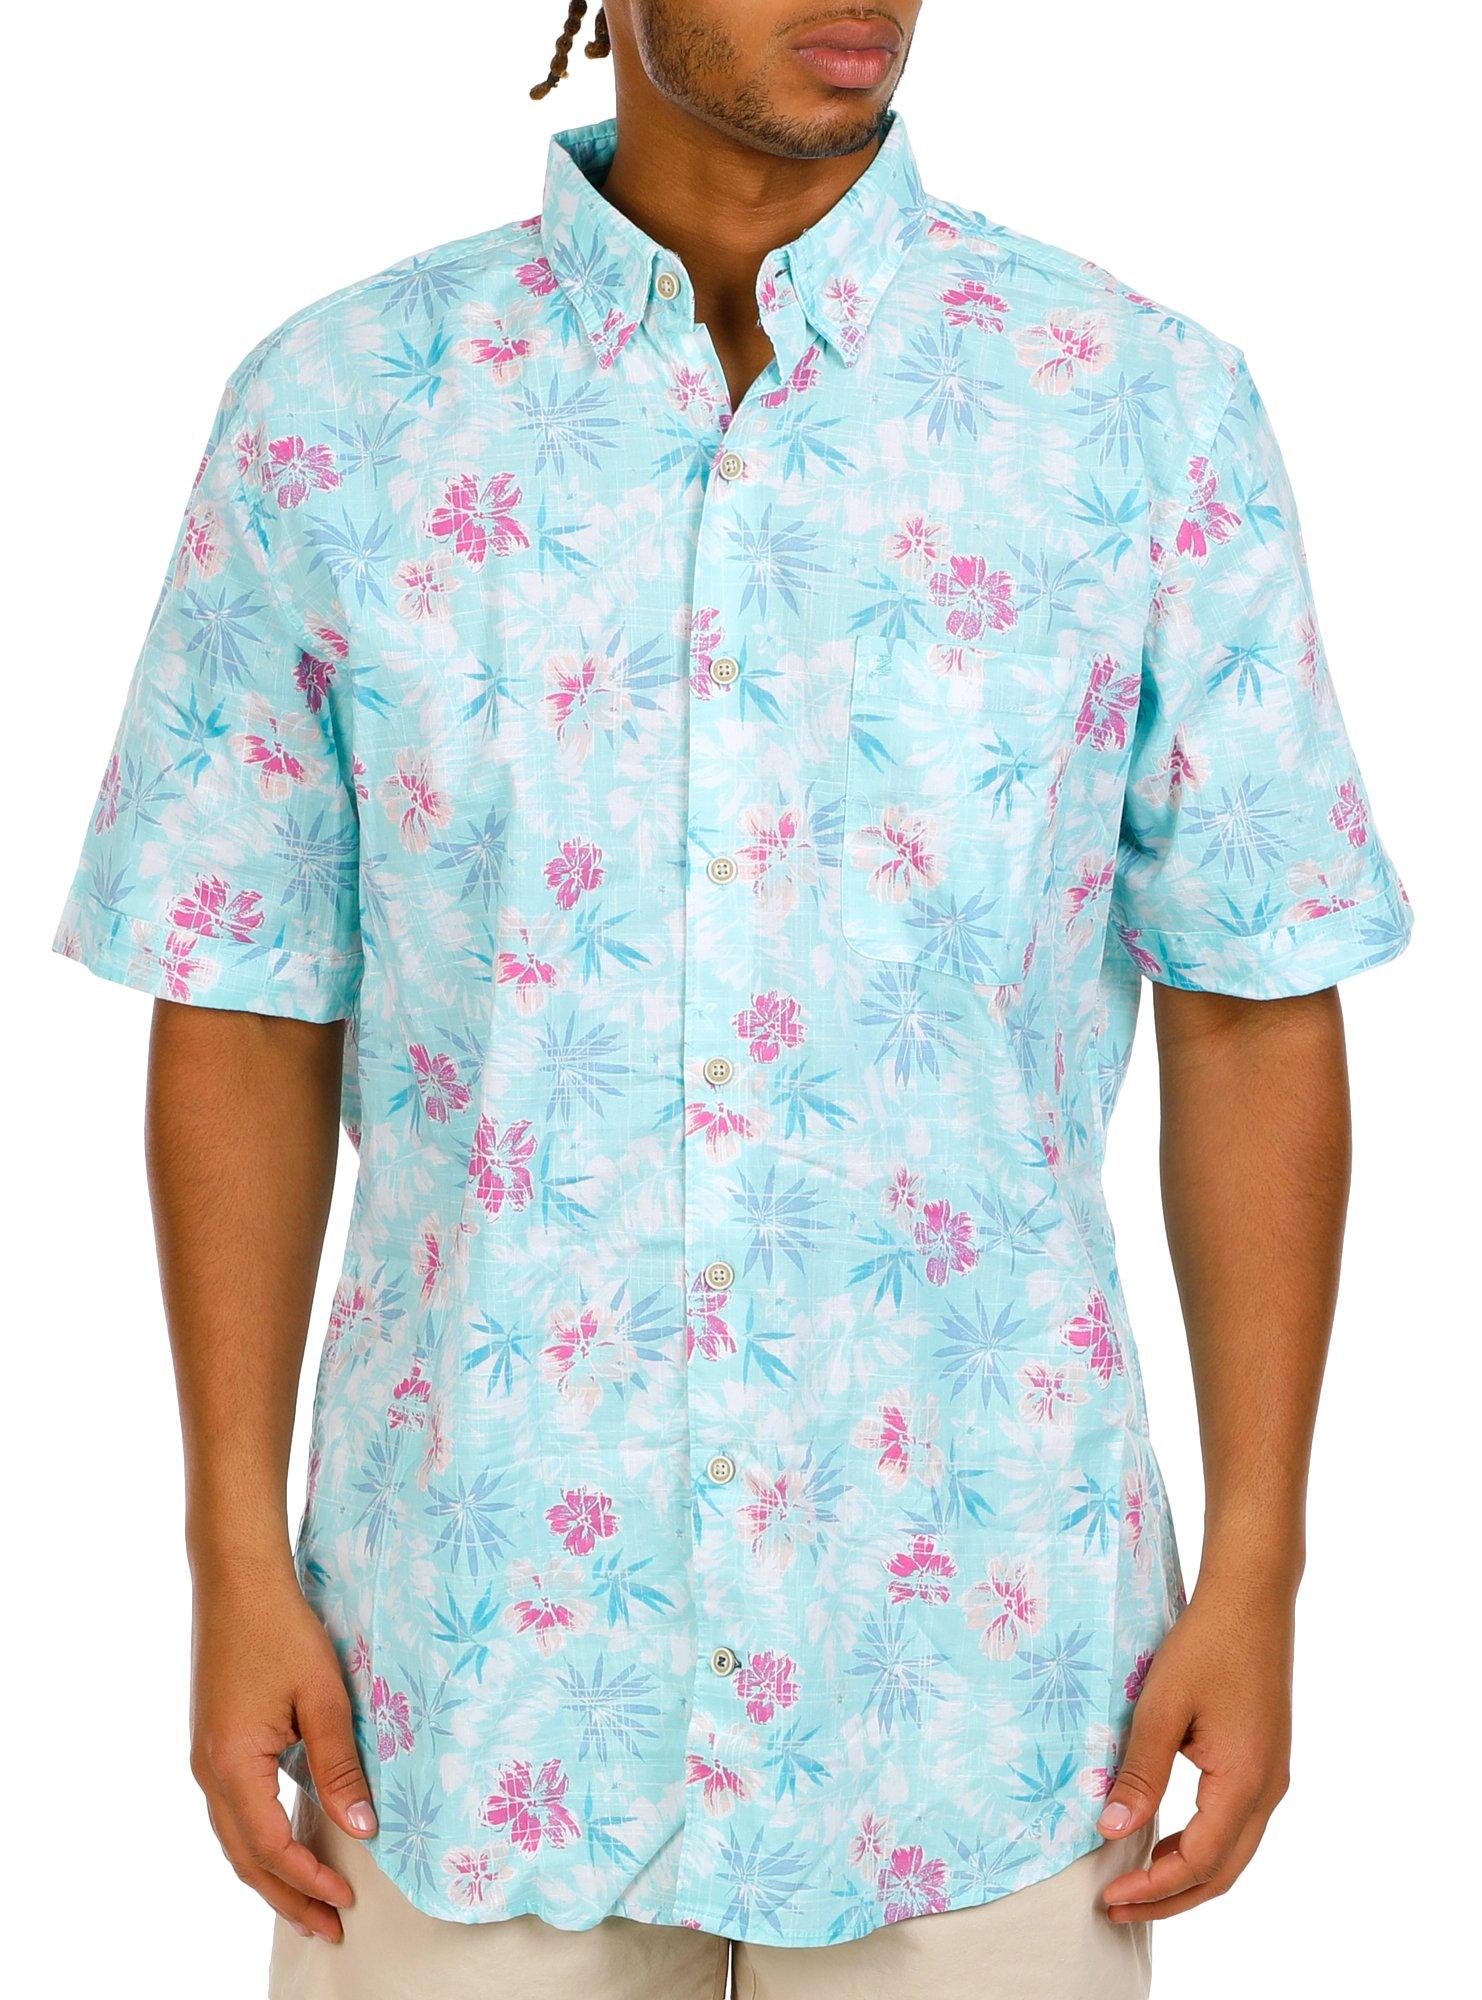 Big Men's Floral Print Button Down Shirt